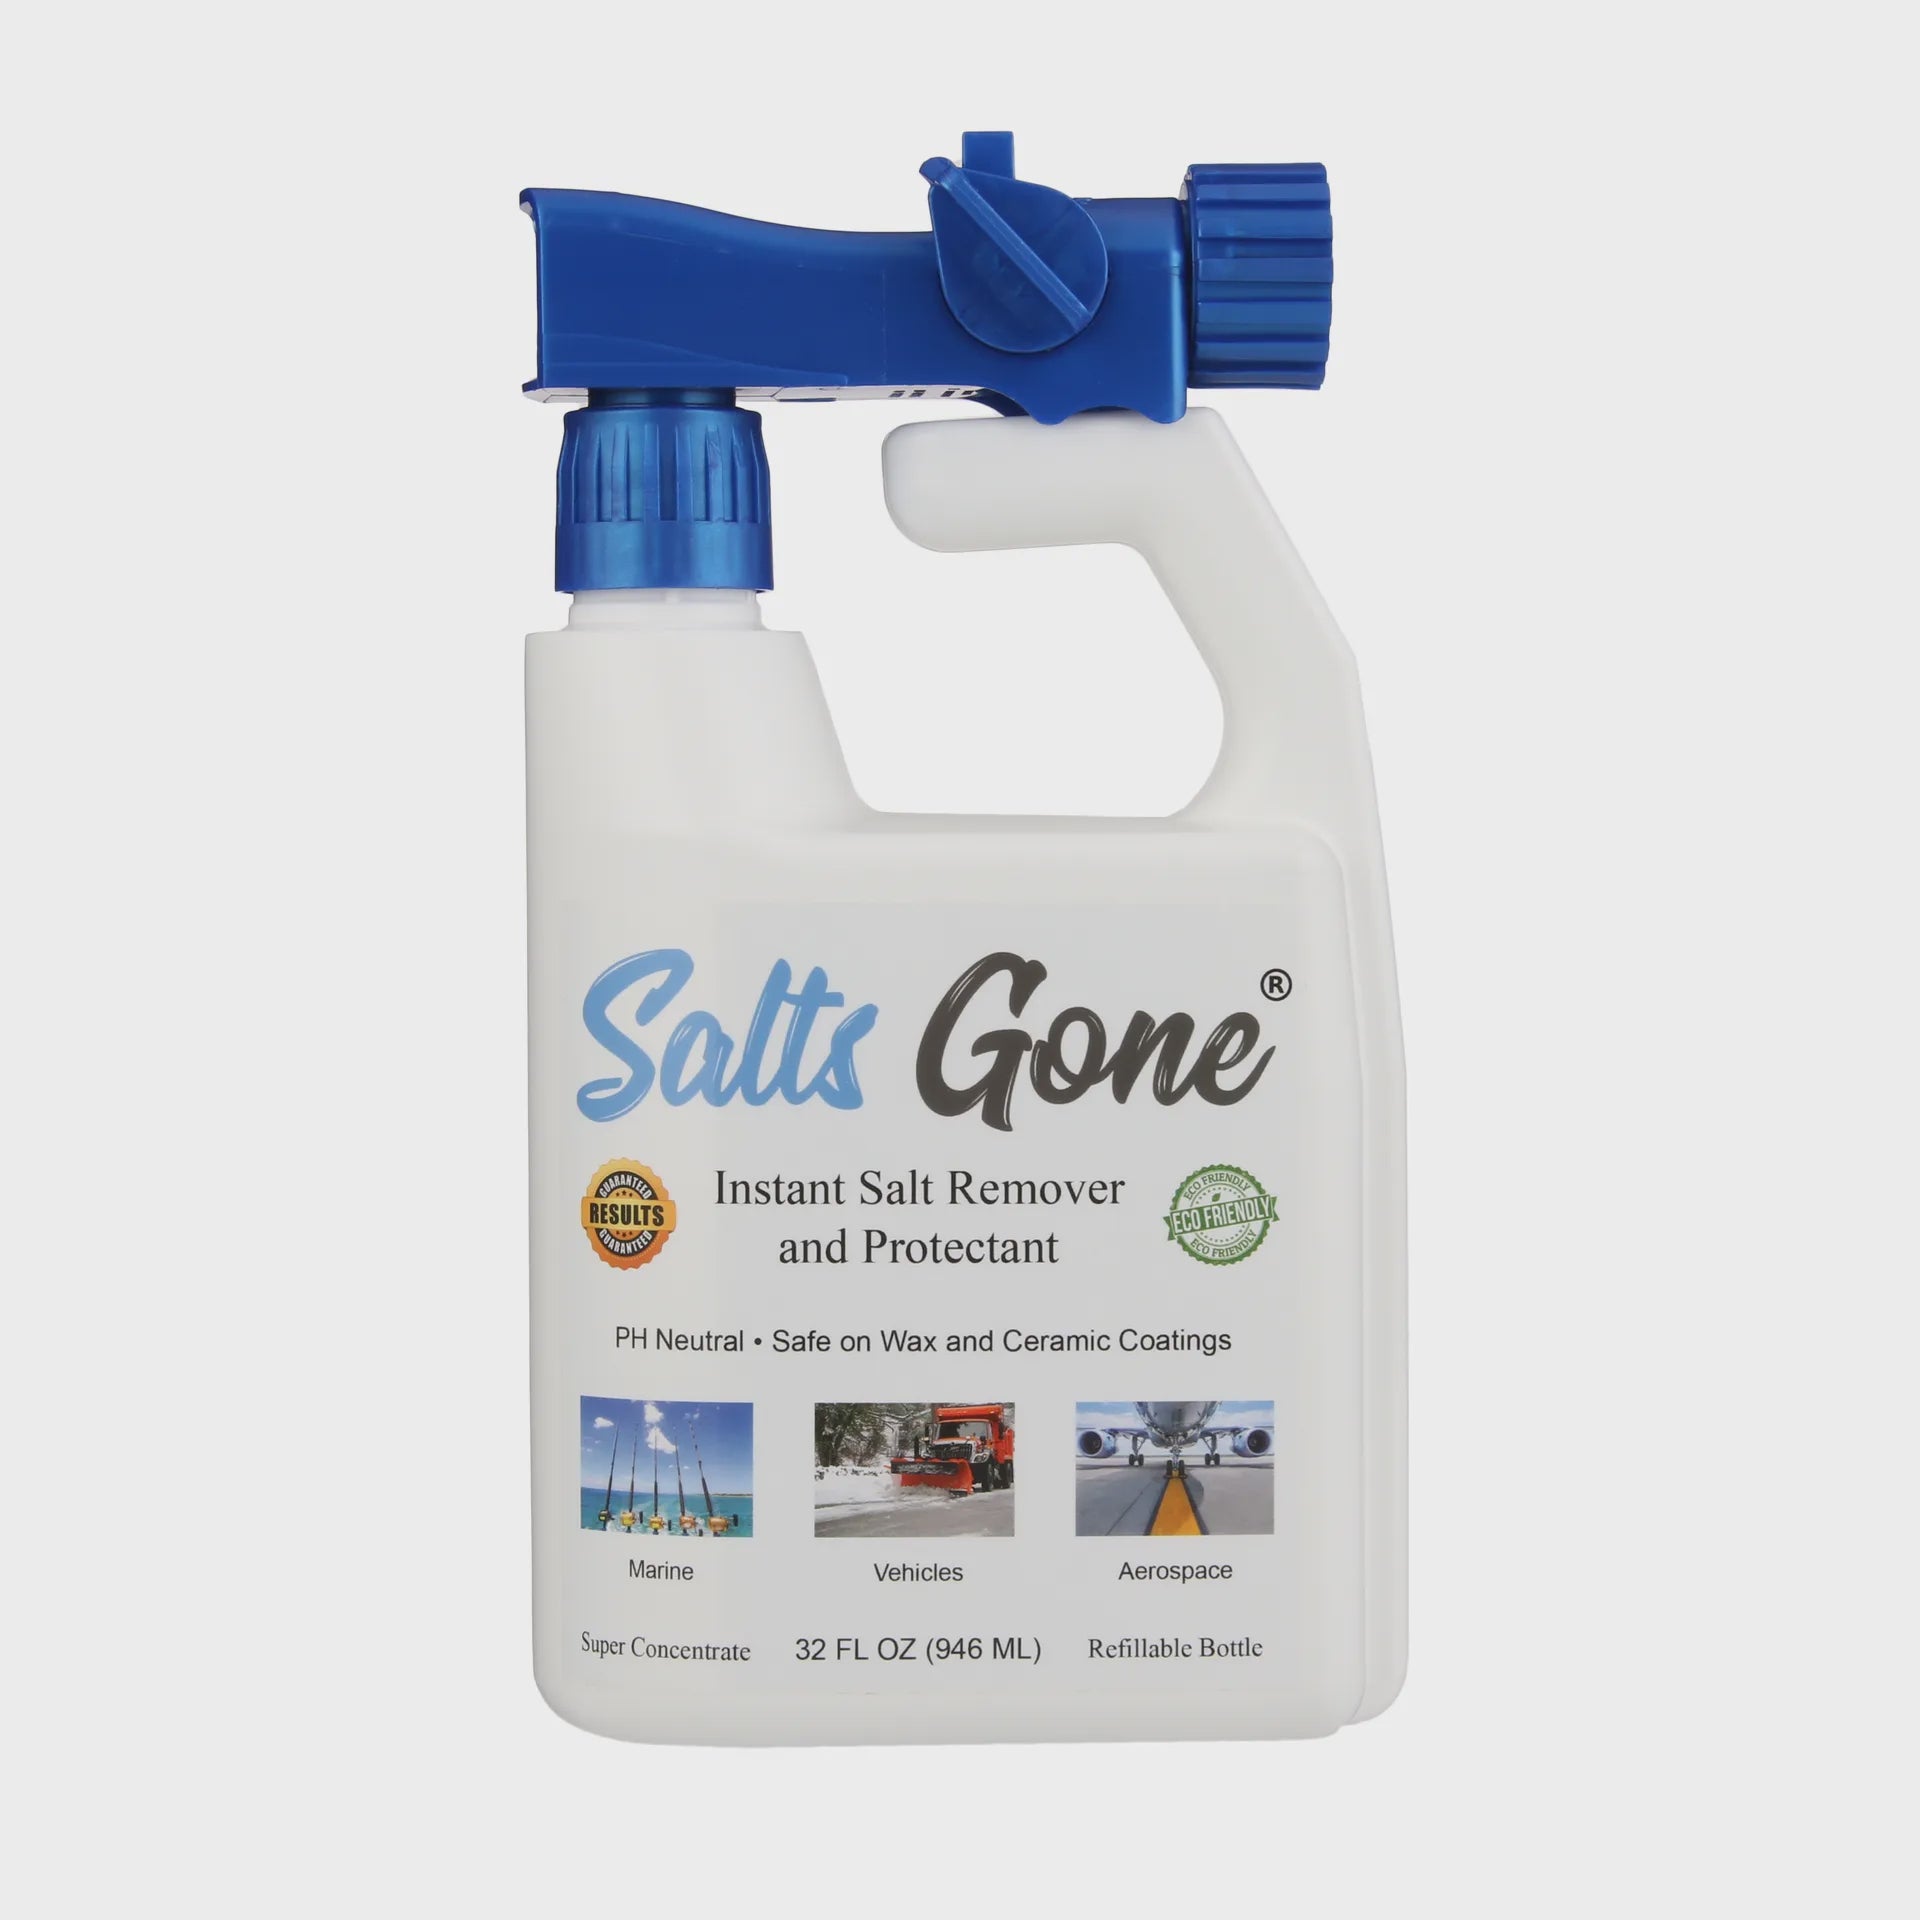 Salts Gone - Salt & Brine Remover - 3 sizes Available